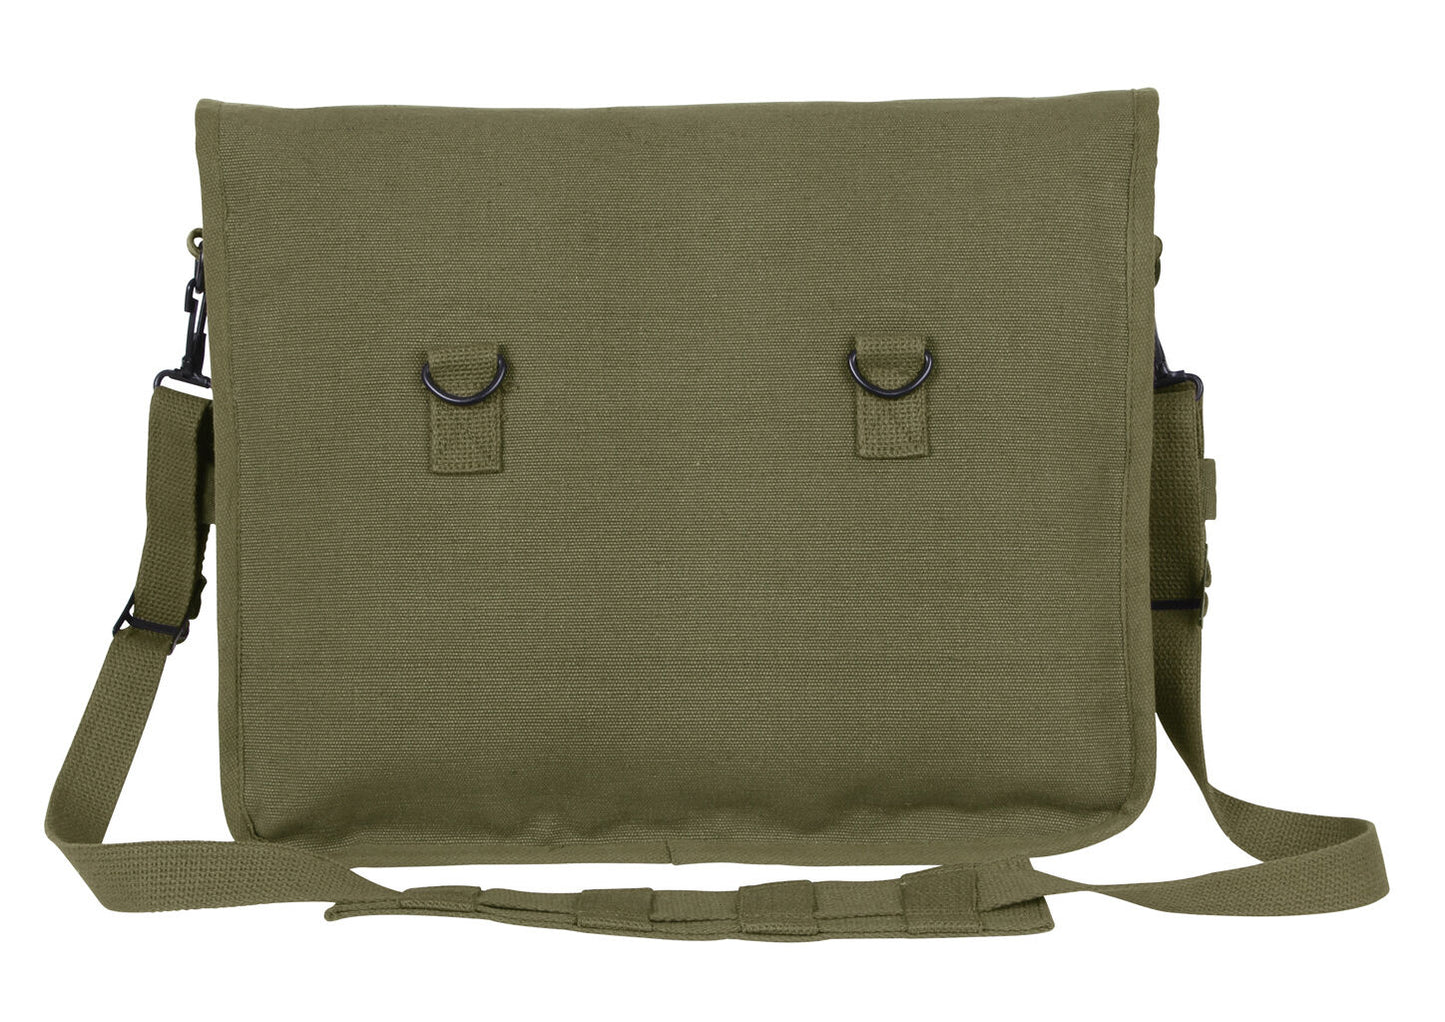 Rothco Canvas Israeli Paratrooper Bag